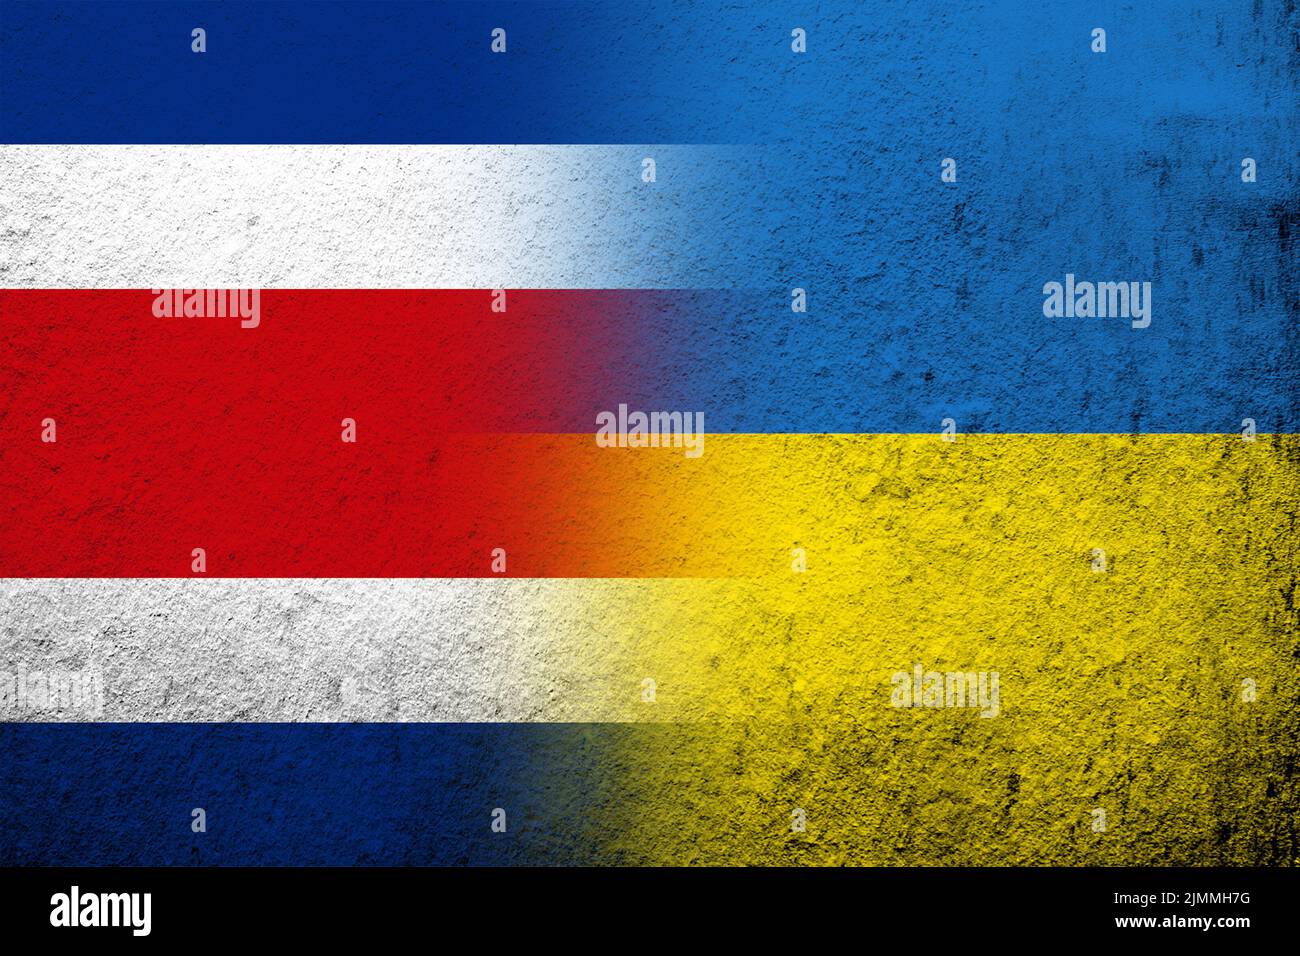 Republic of Costa Rica National flag with National flag of Ukraine. Grunge background Stock Photo